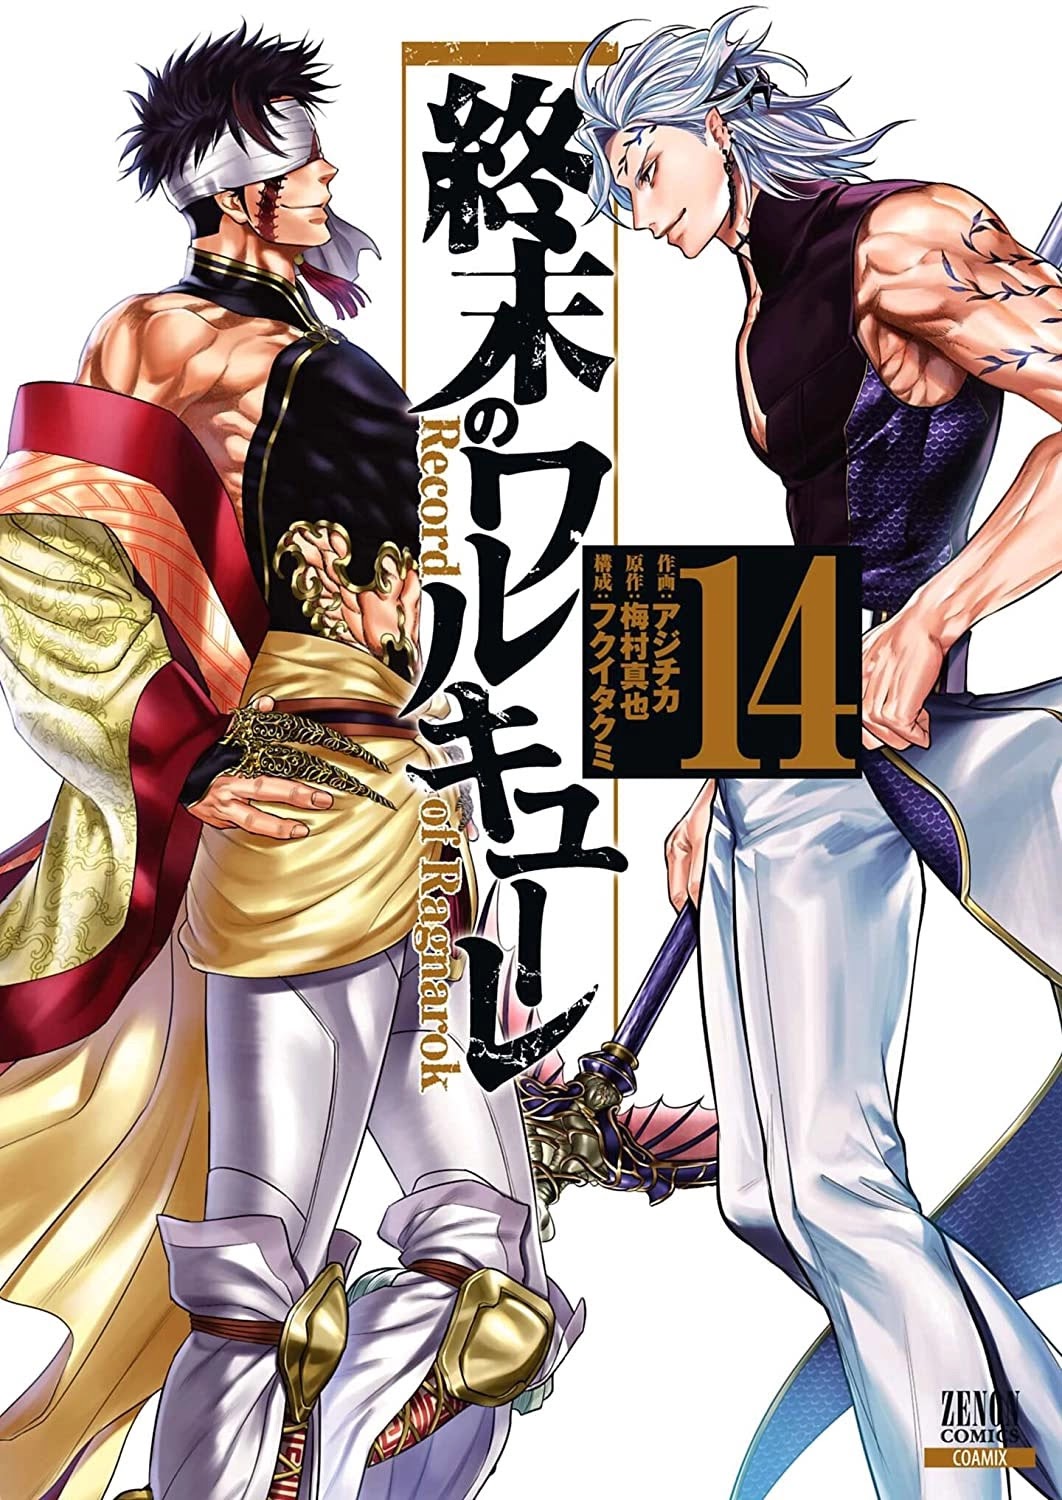 El manga Shuumatsu no Valkyrie revelo la portada para su volumen #14